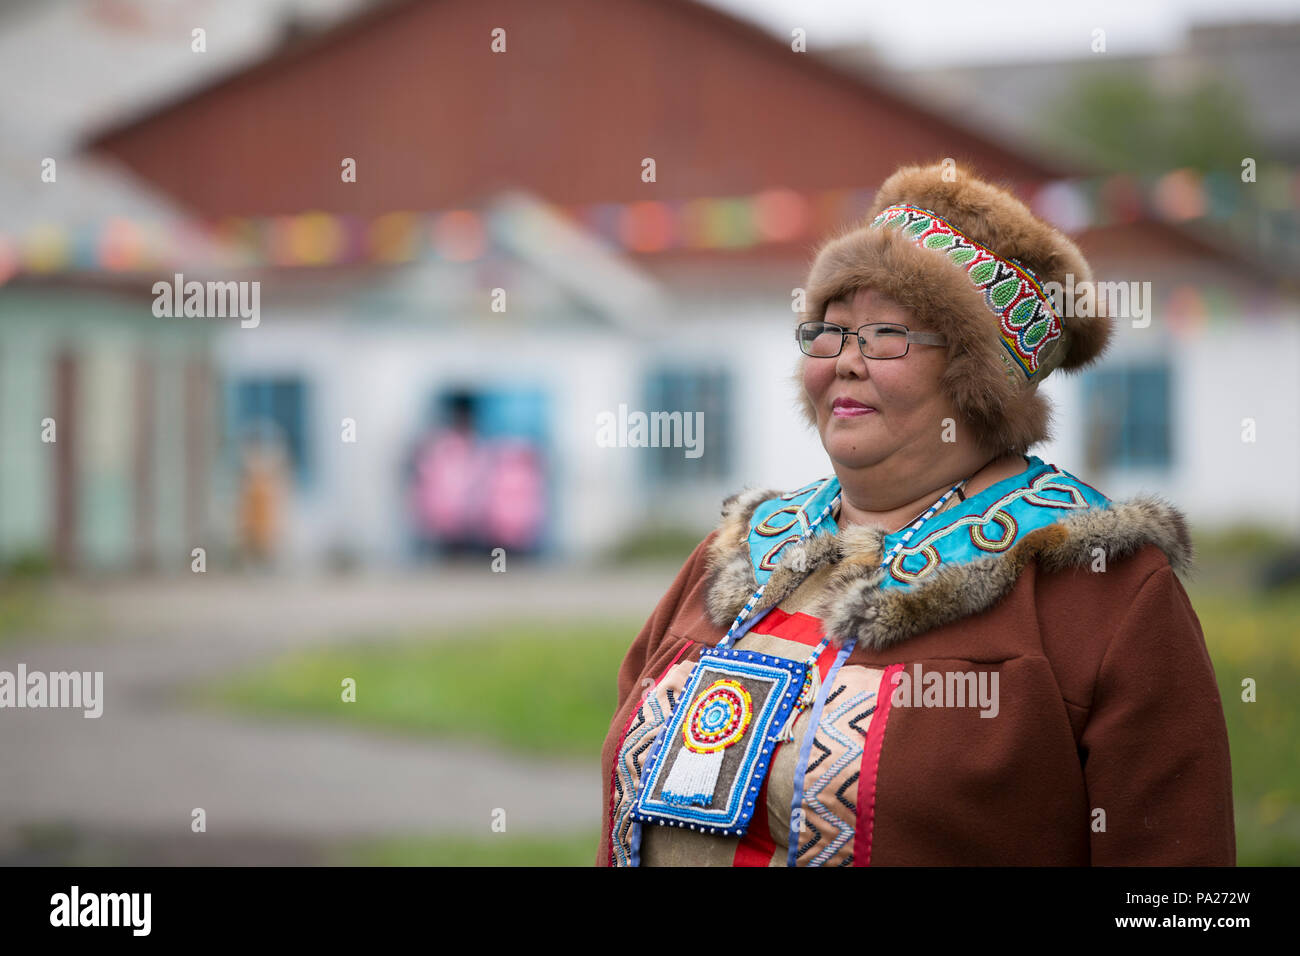 Femme en costume traditionnel, la ville d'Okhotsk, Russie Banque D'Images